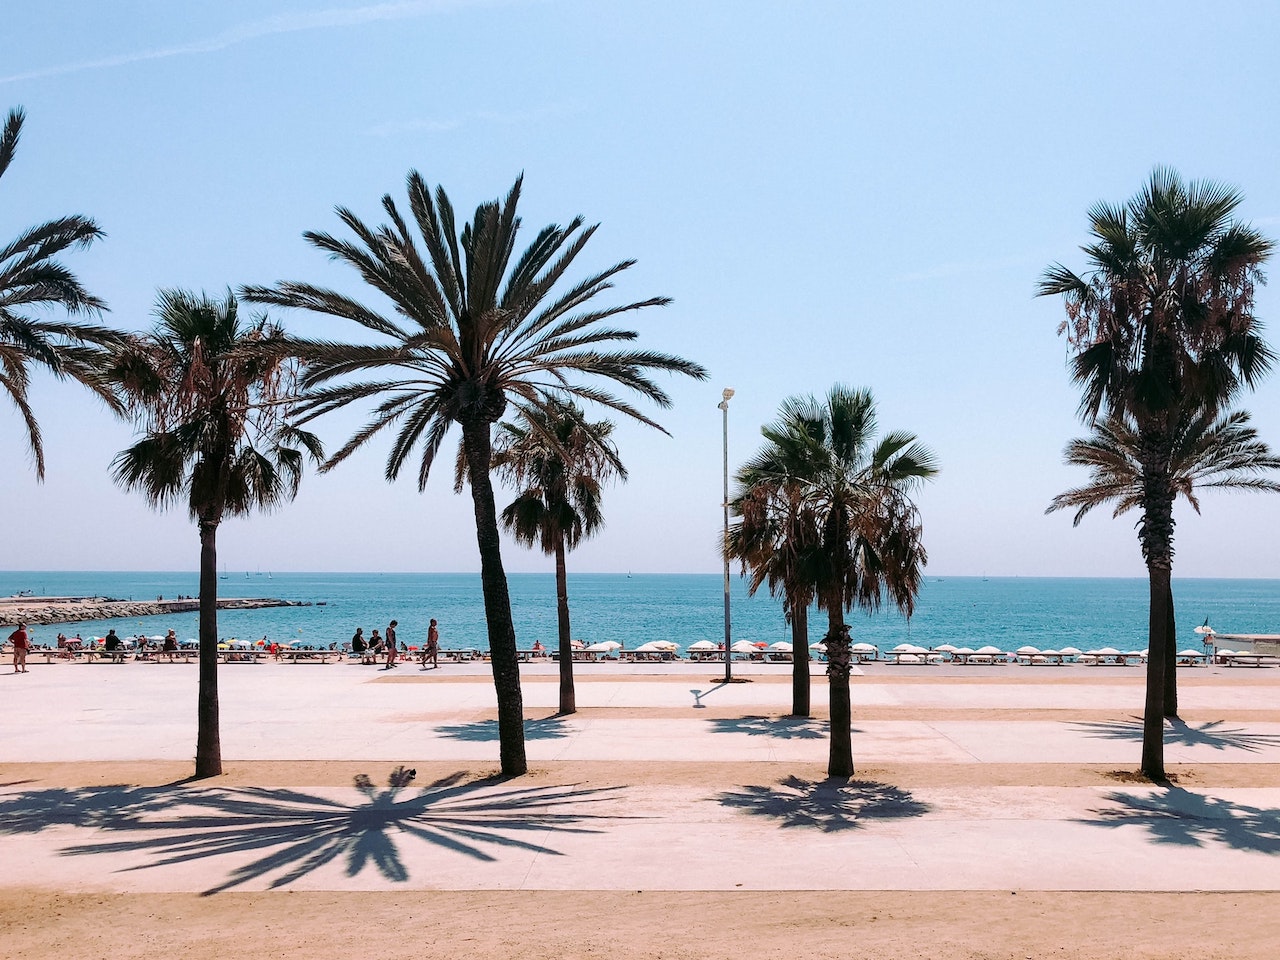 Barcelona Beach Guide - Photo by Lucrezia Carnelos on Unsplash